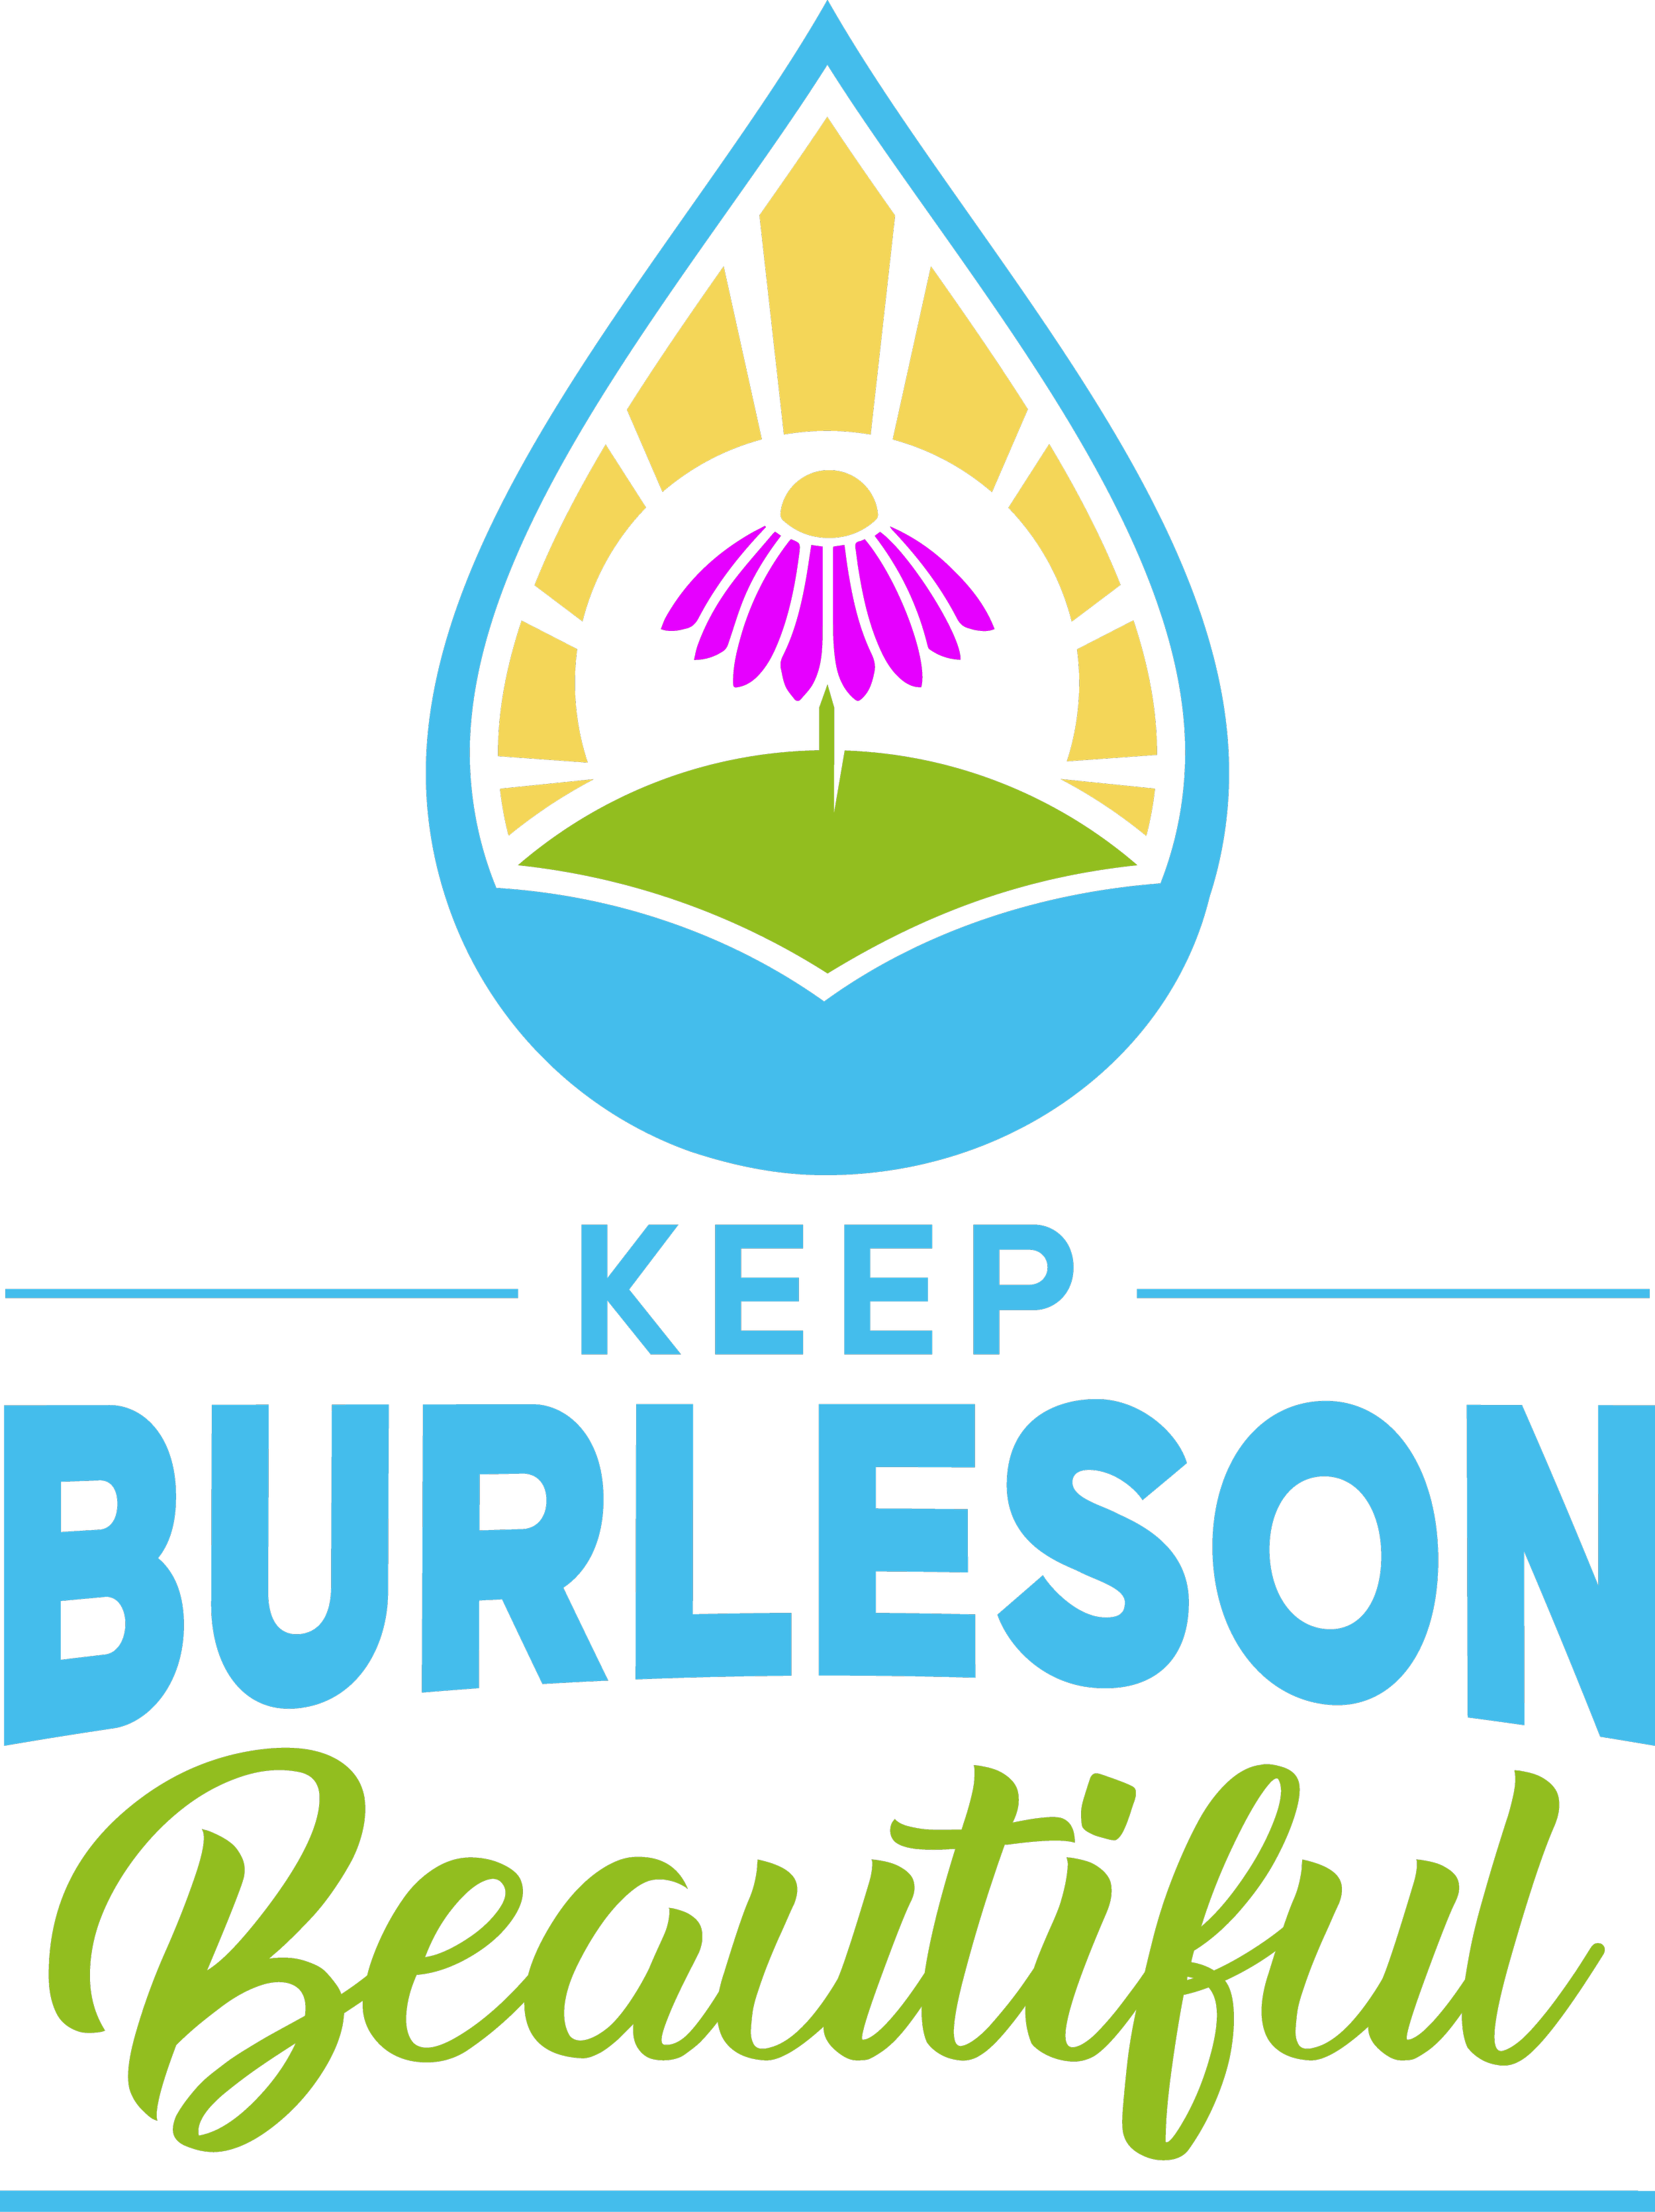 Keep+Burleson+Beautiful+-+vertical.png